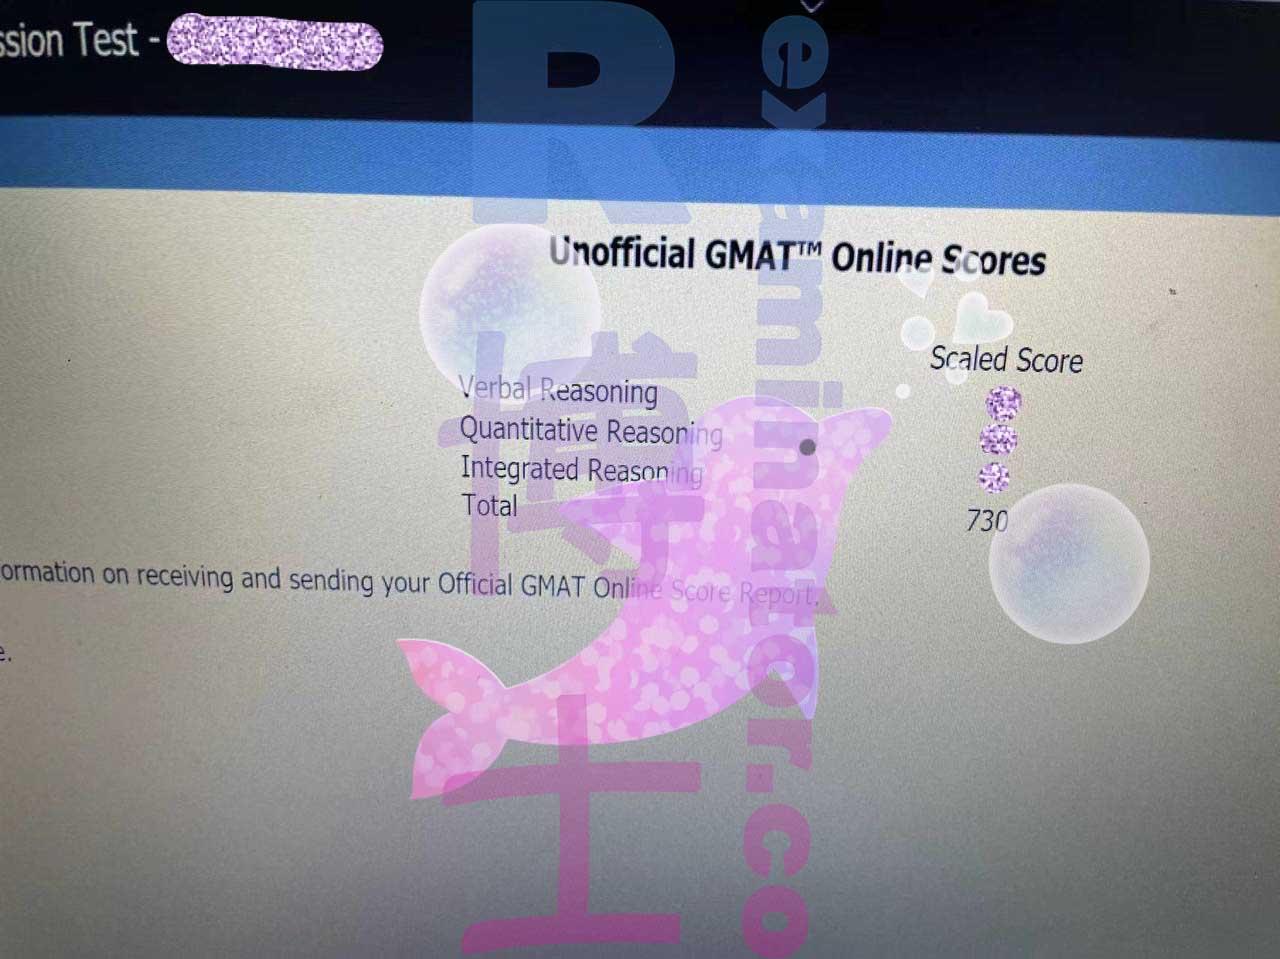 score image for GMAT Proxy Testing success story #347